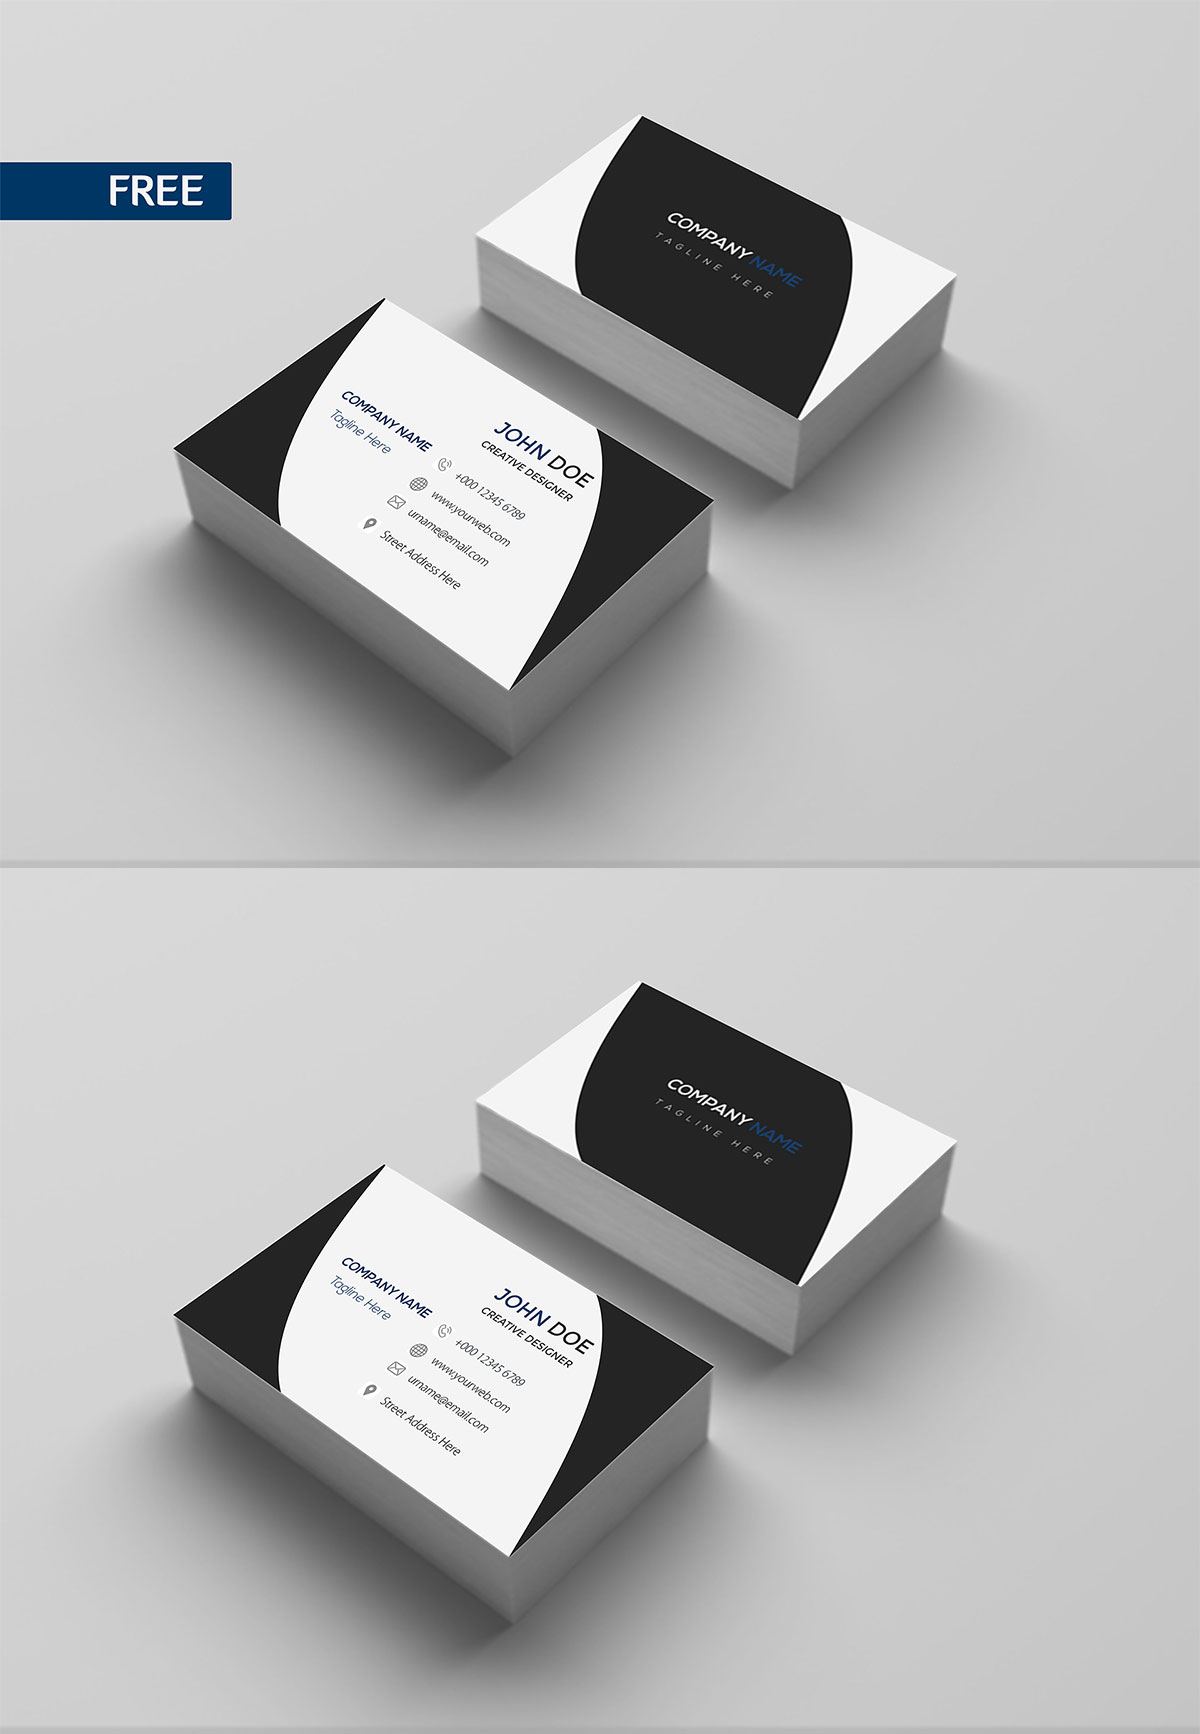 Free Print Design Business Card Template – Creativetacos Throughout Free Template Business Cards To Print